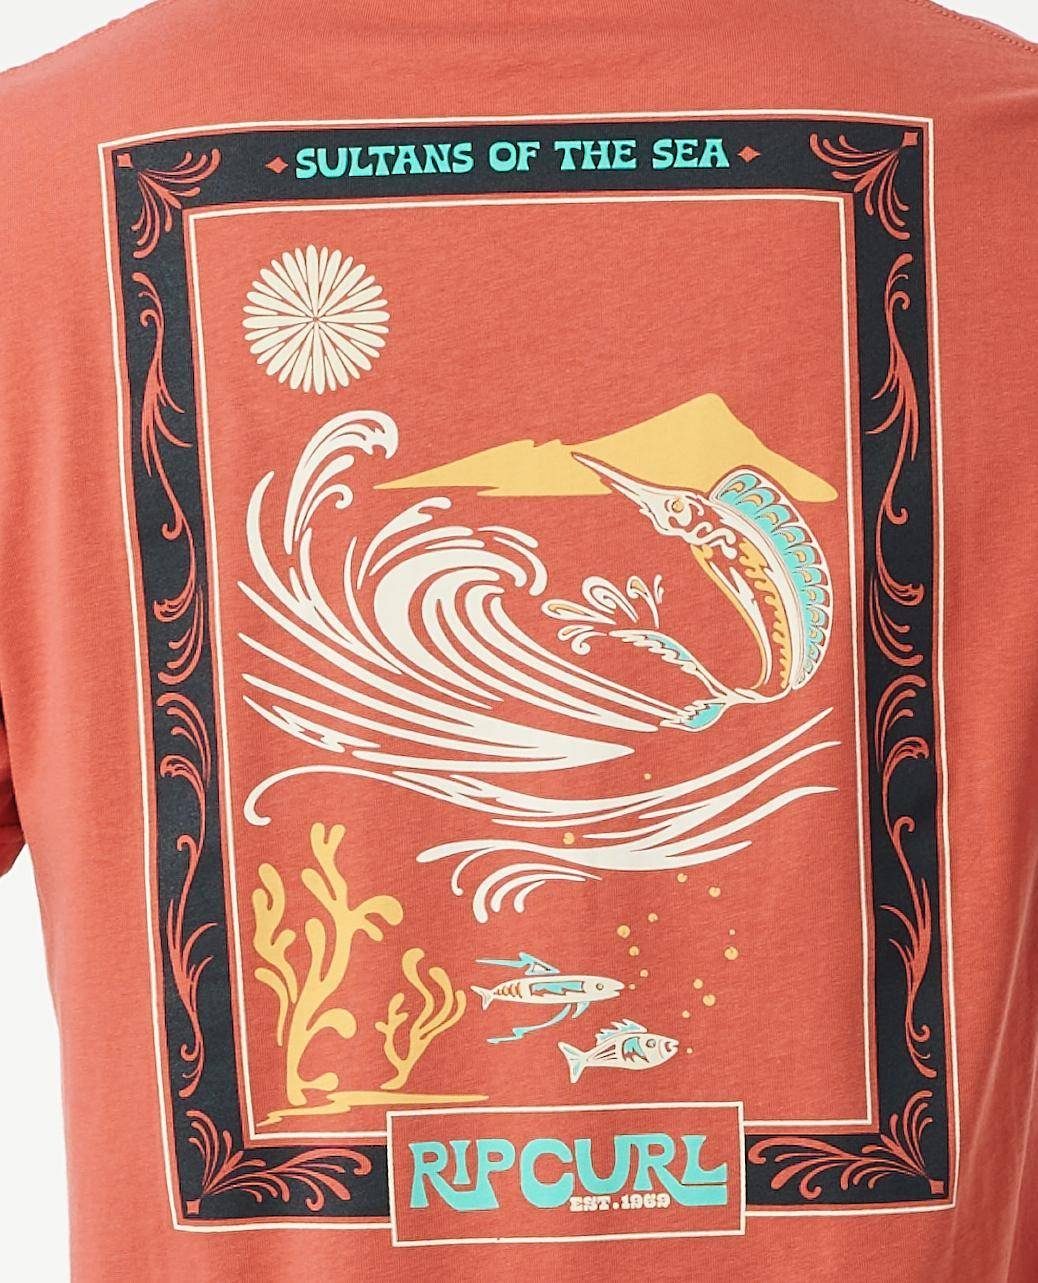 Reef Rip Curl Pacific T-Shirt Rinse T-Shirt